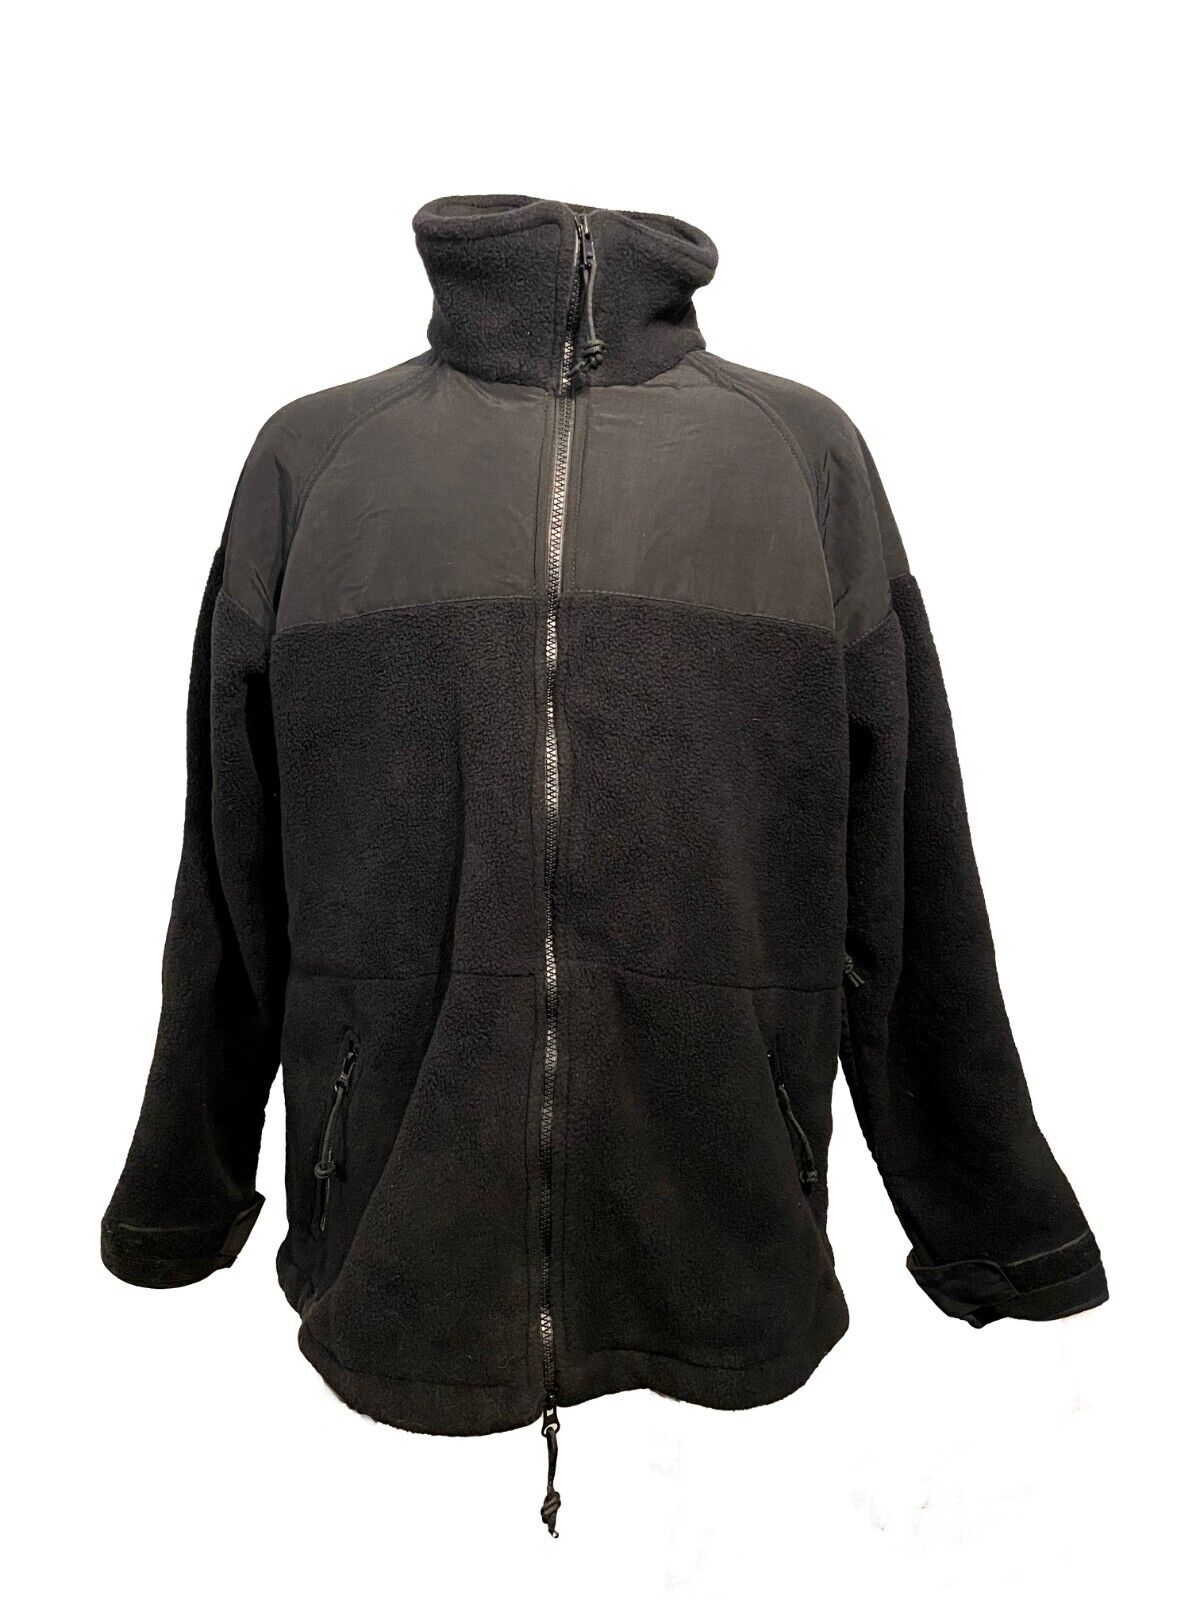 DSCP by Peckham US Military  Black Polartec  Fleece Cold Weather Jacket Medium